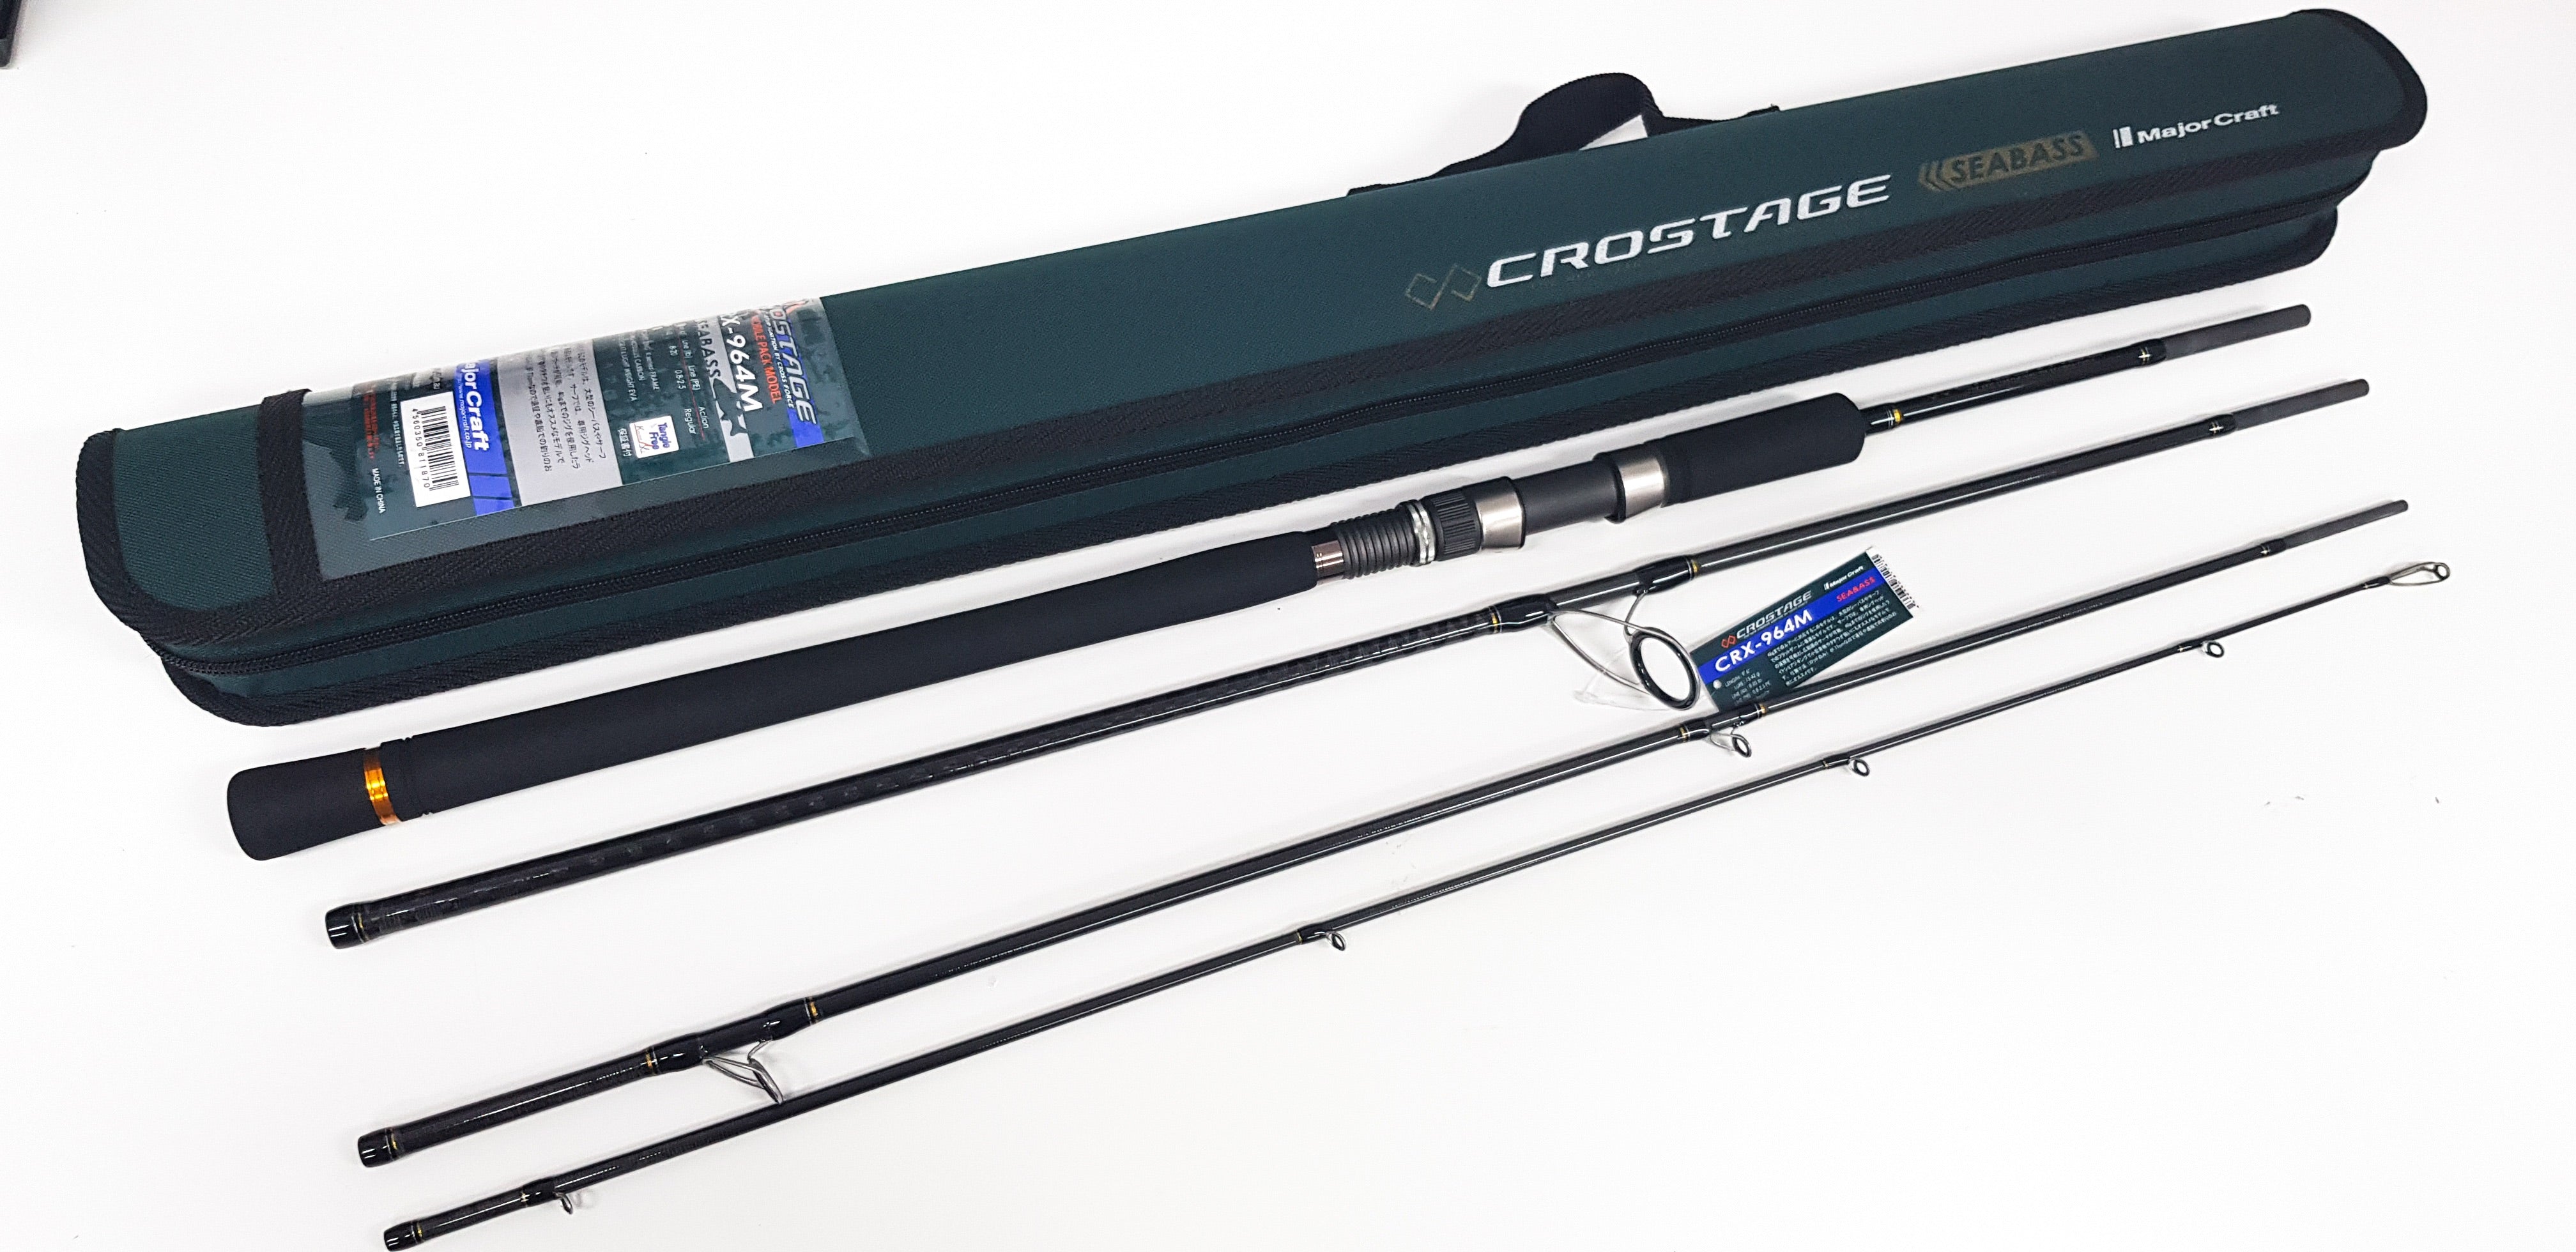 Major Craft Crostage Series Spinning Rod Travel Rod 1863 CRX-964ML